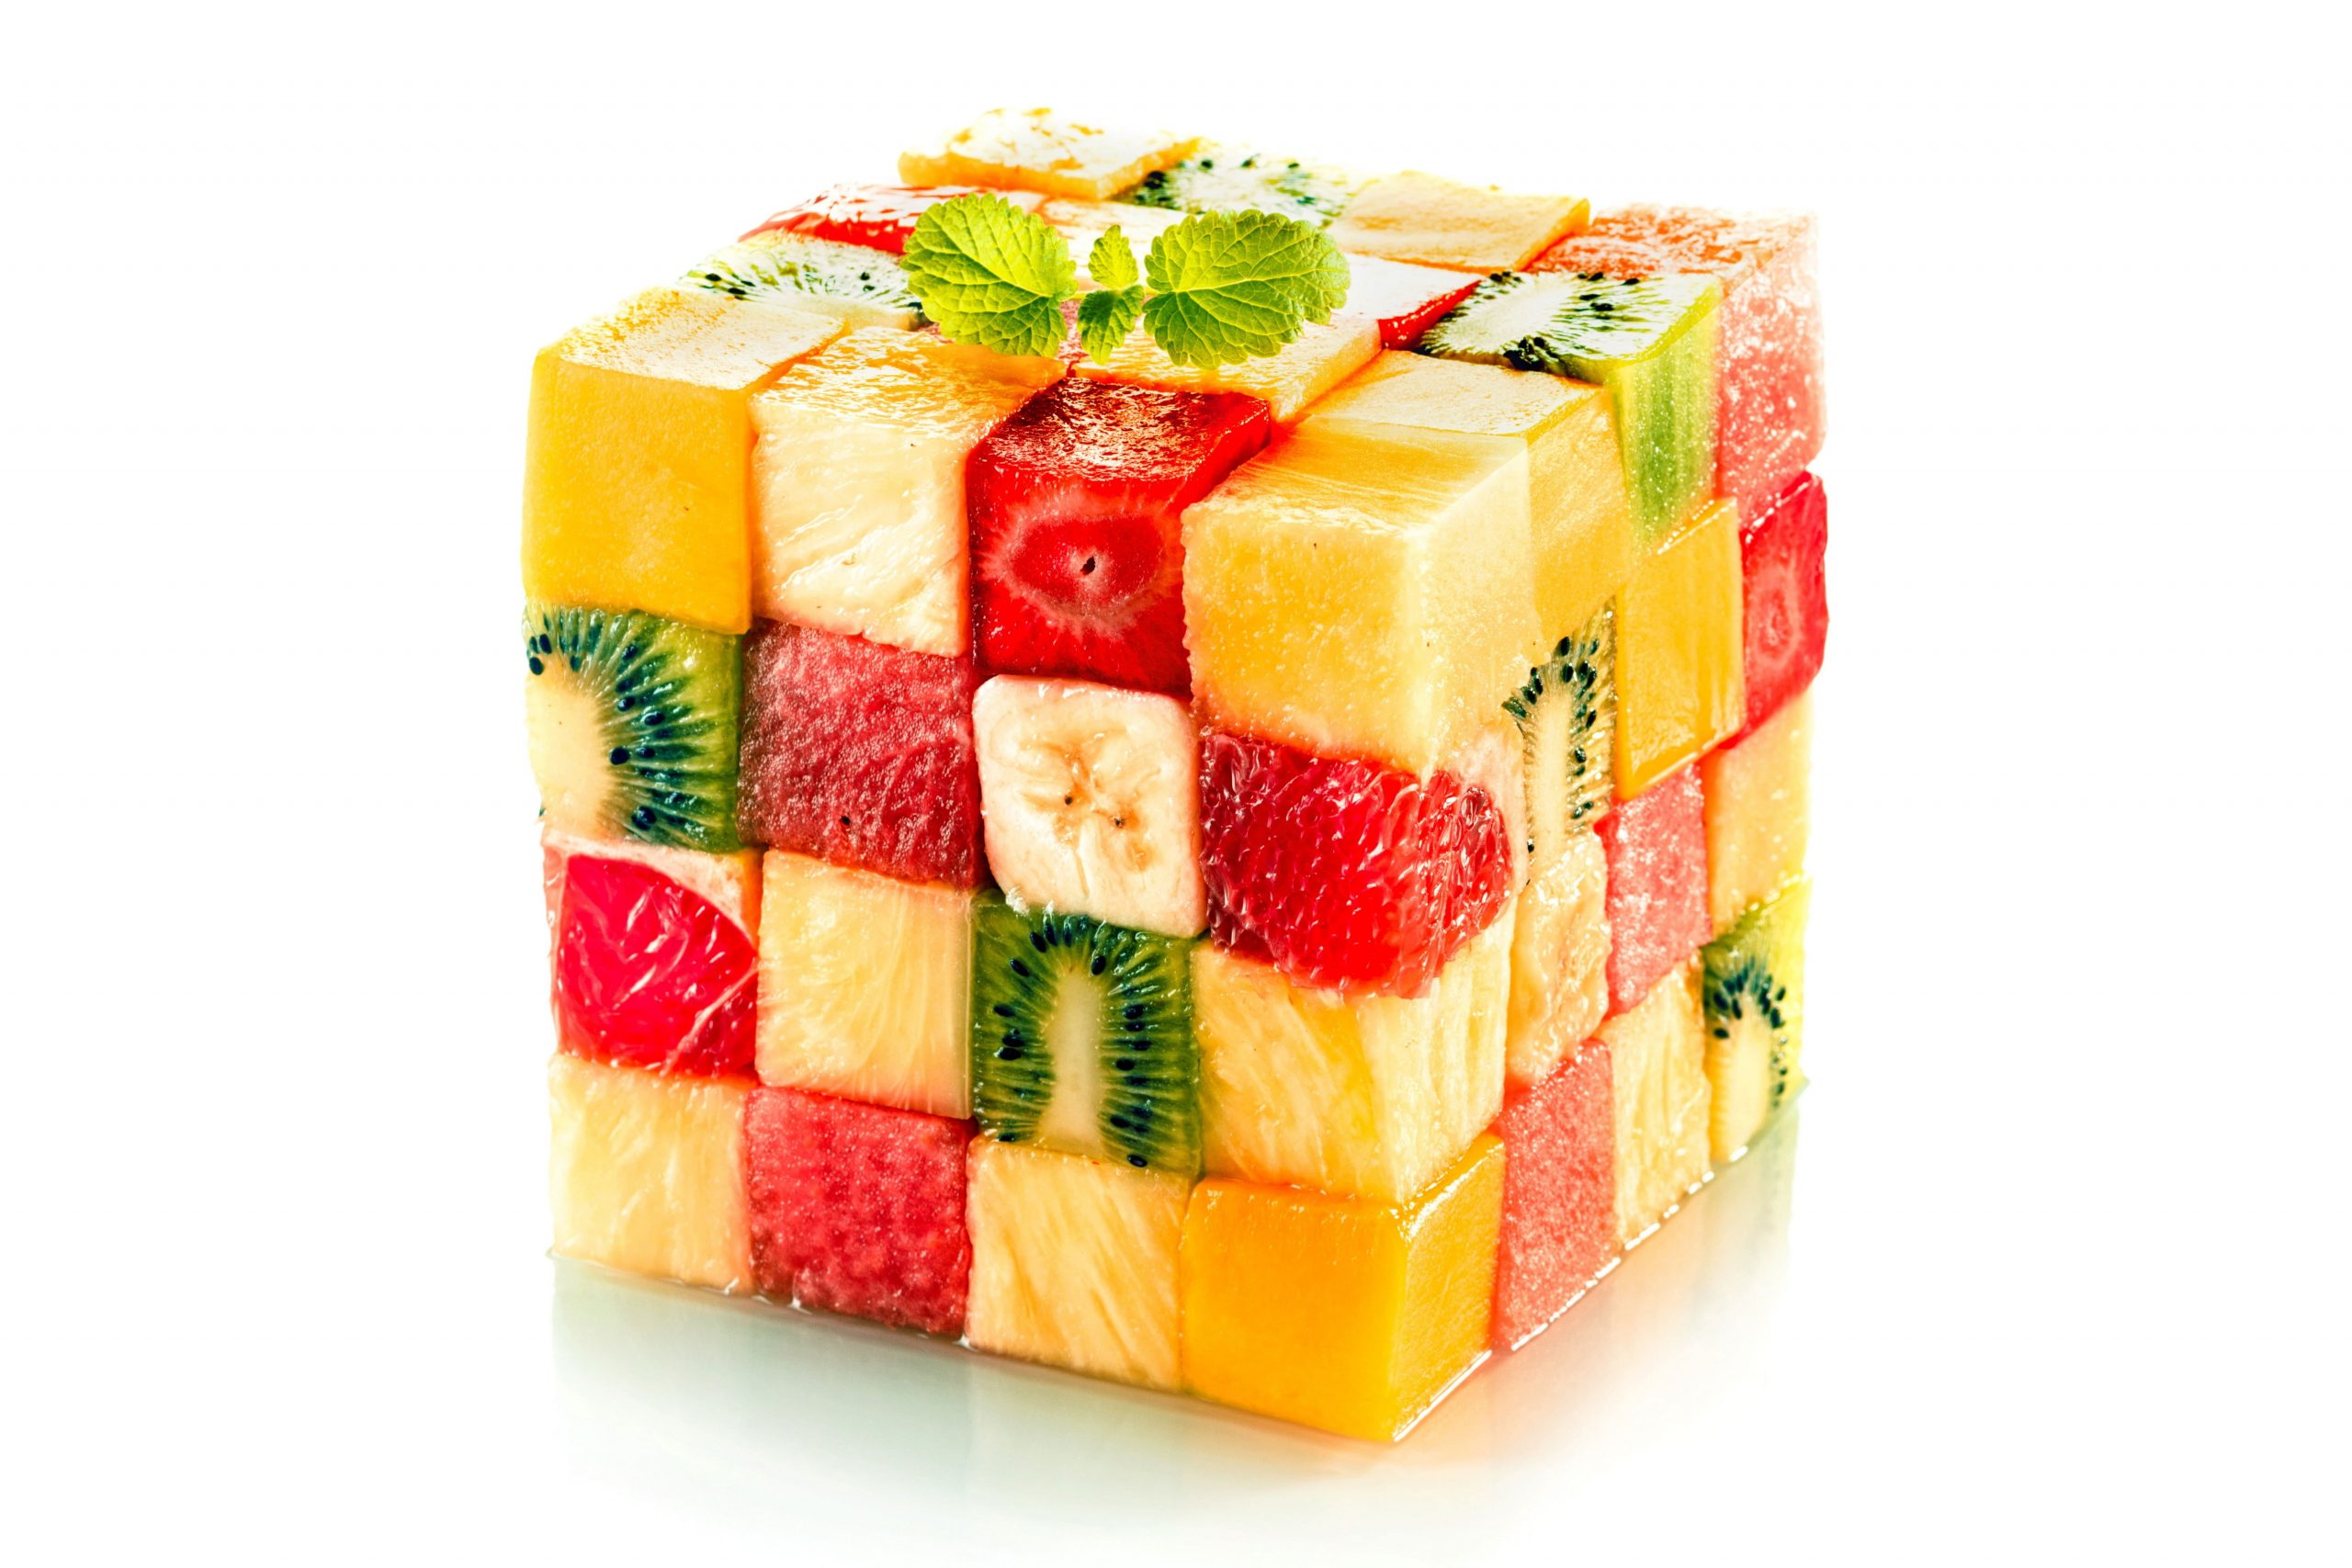 Cube fruits wallpaper, cube-shaped sliced fruit decor, kiwi (fruit), food